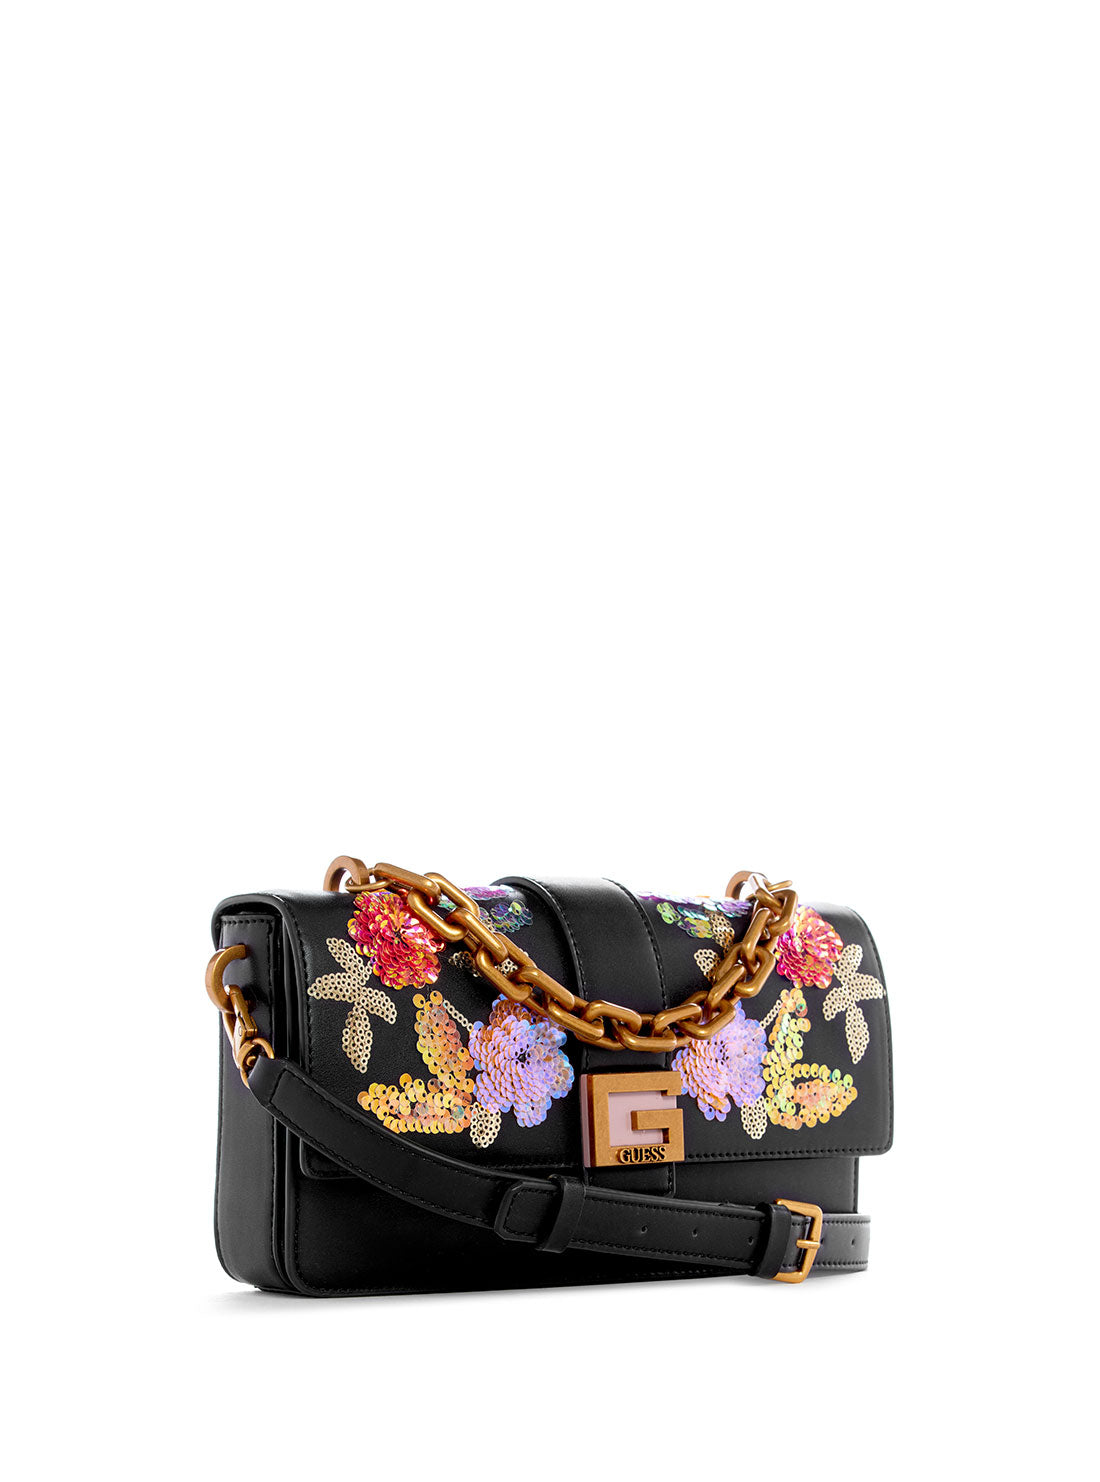 GUESS Women's Black Floral Morada Crossbody Bag FB868221 Front Side View